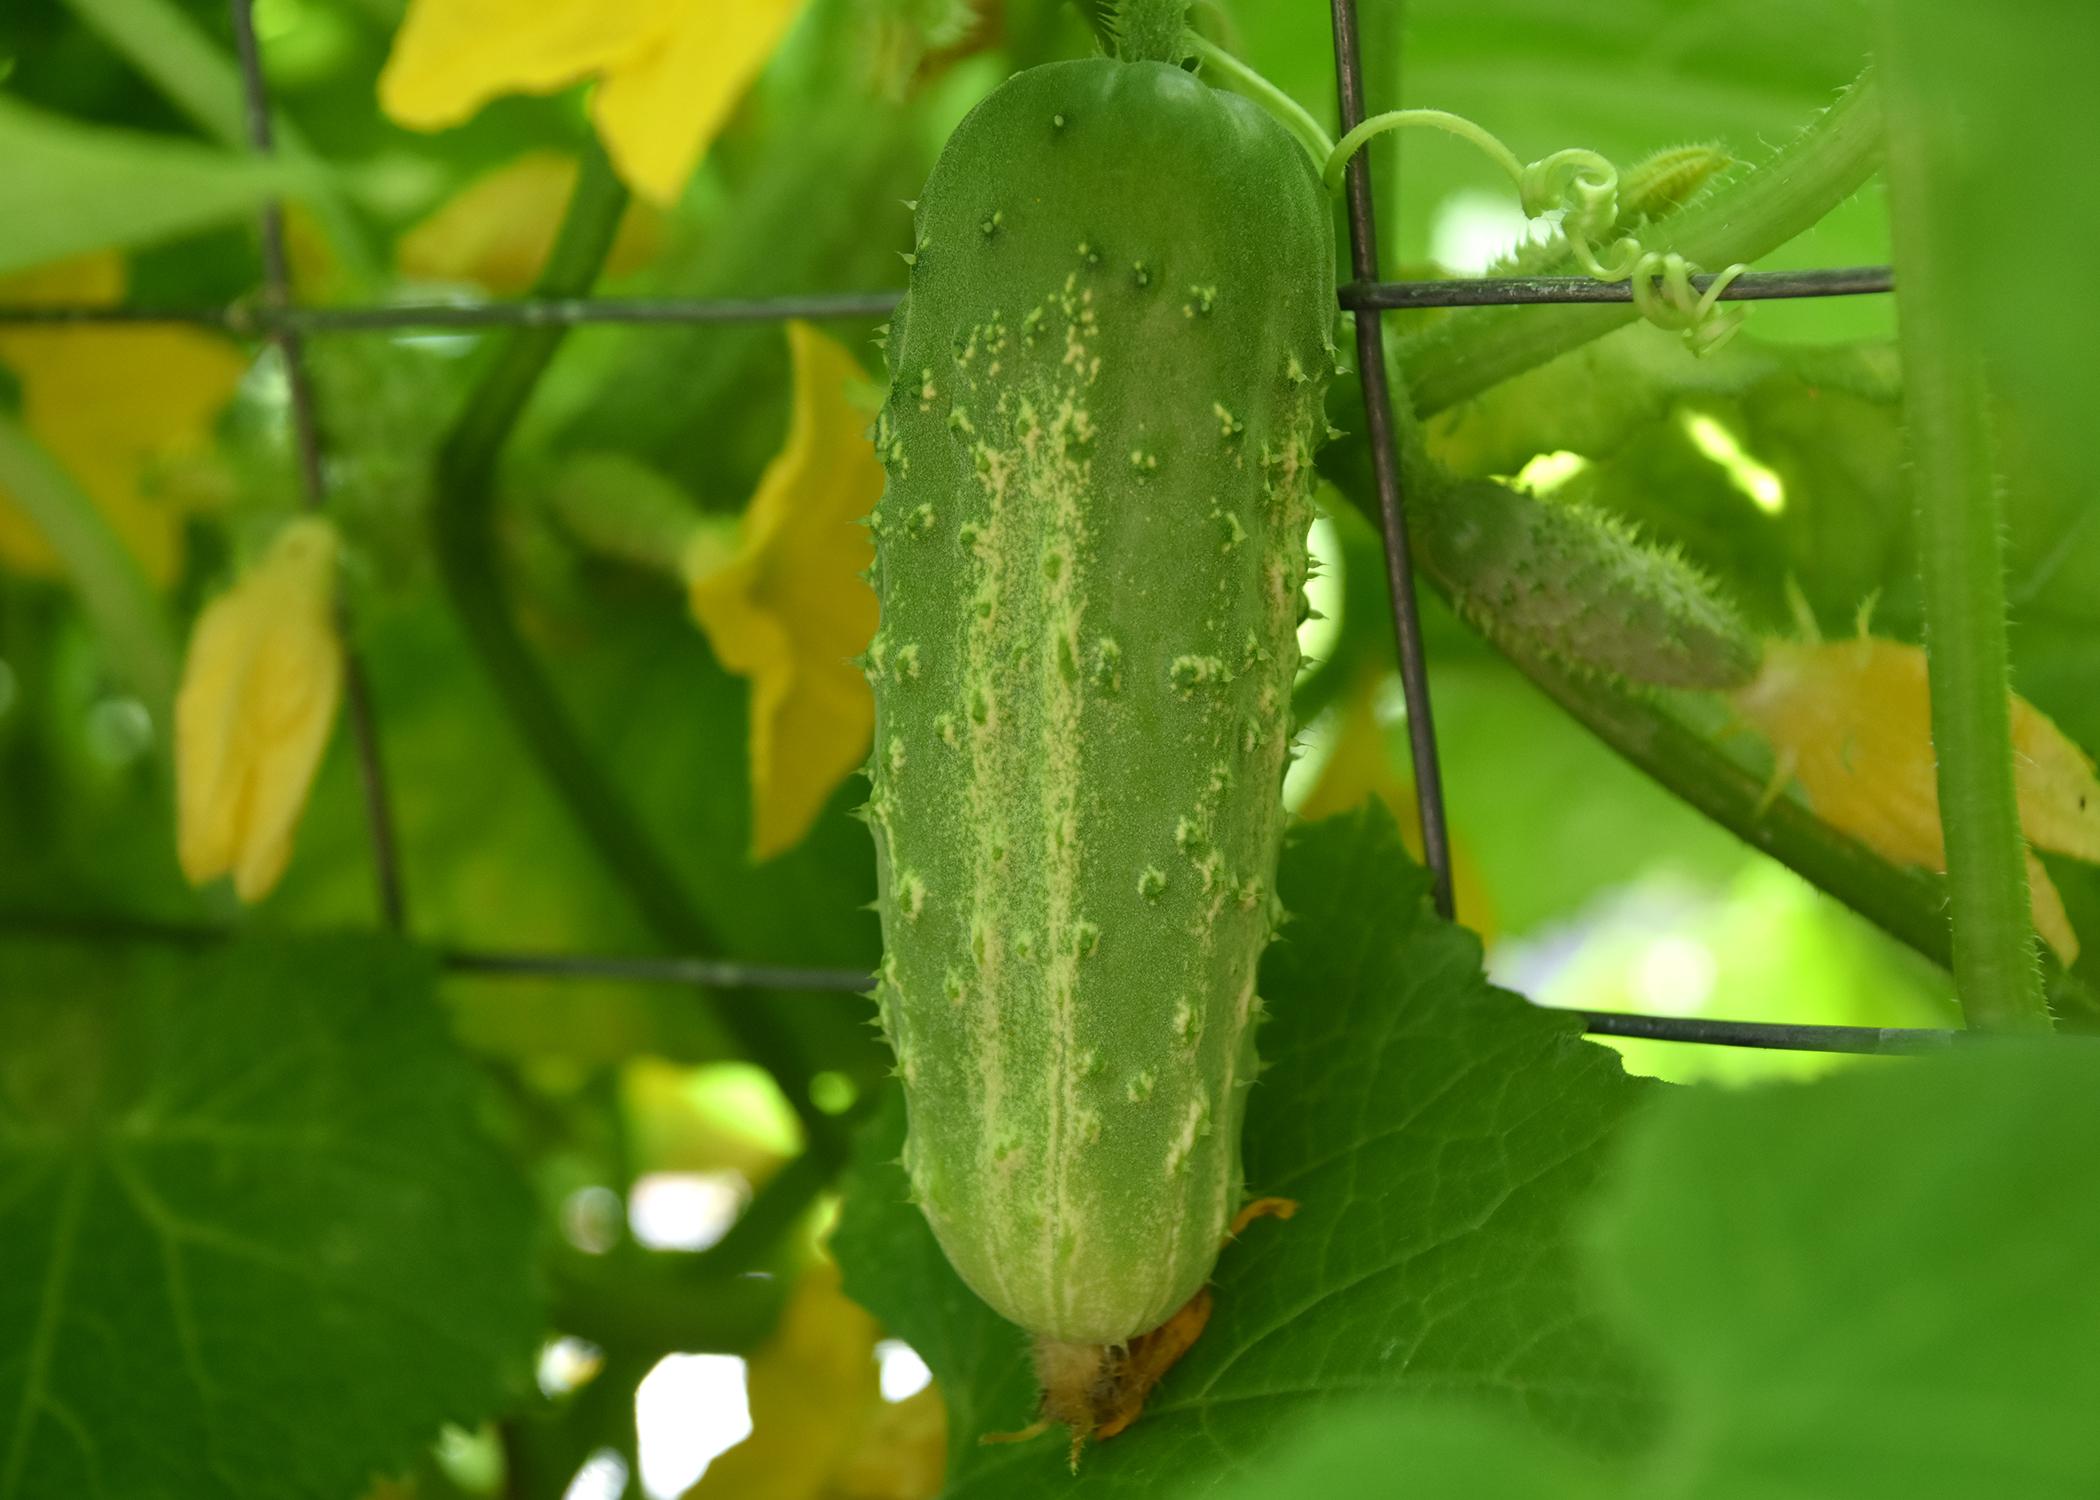 A single, green cucumber hangs on a vine.